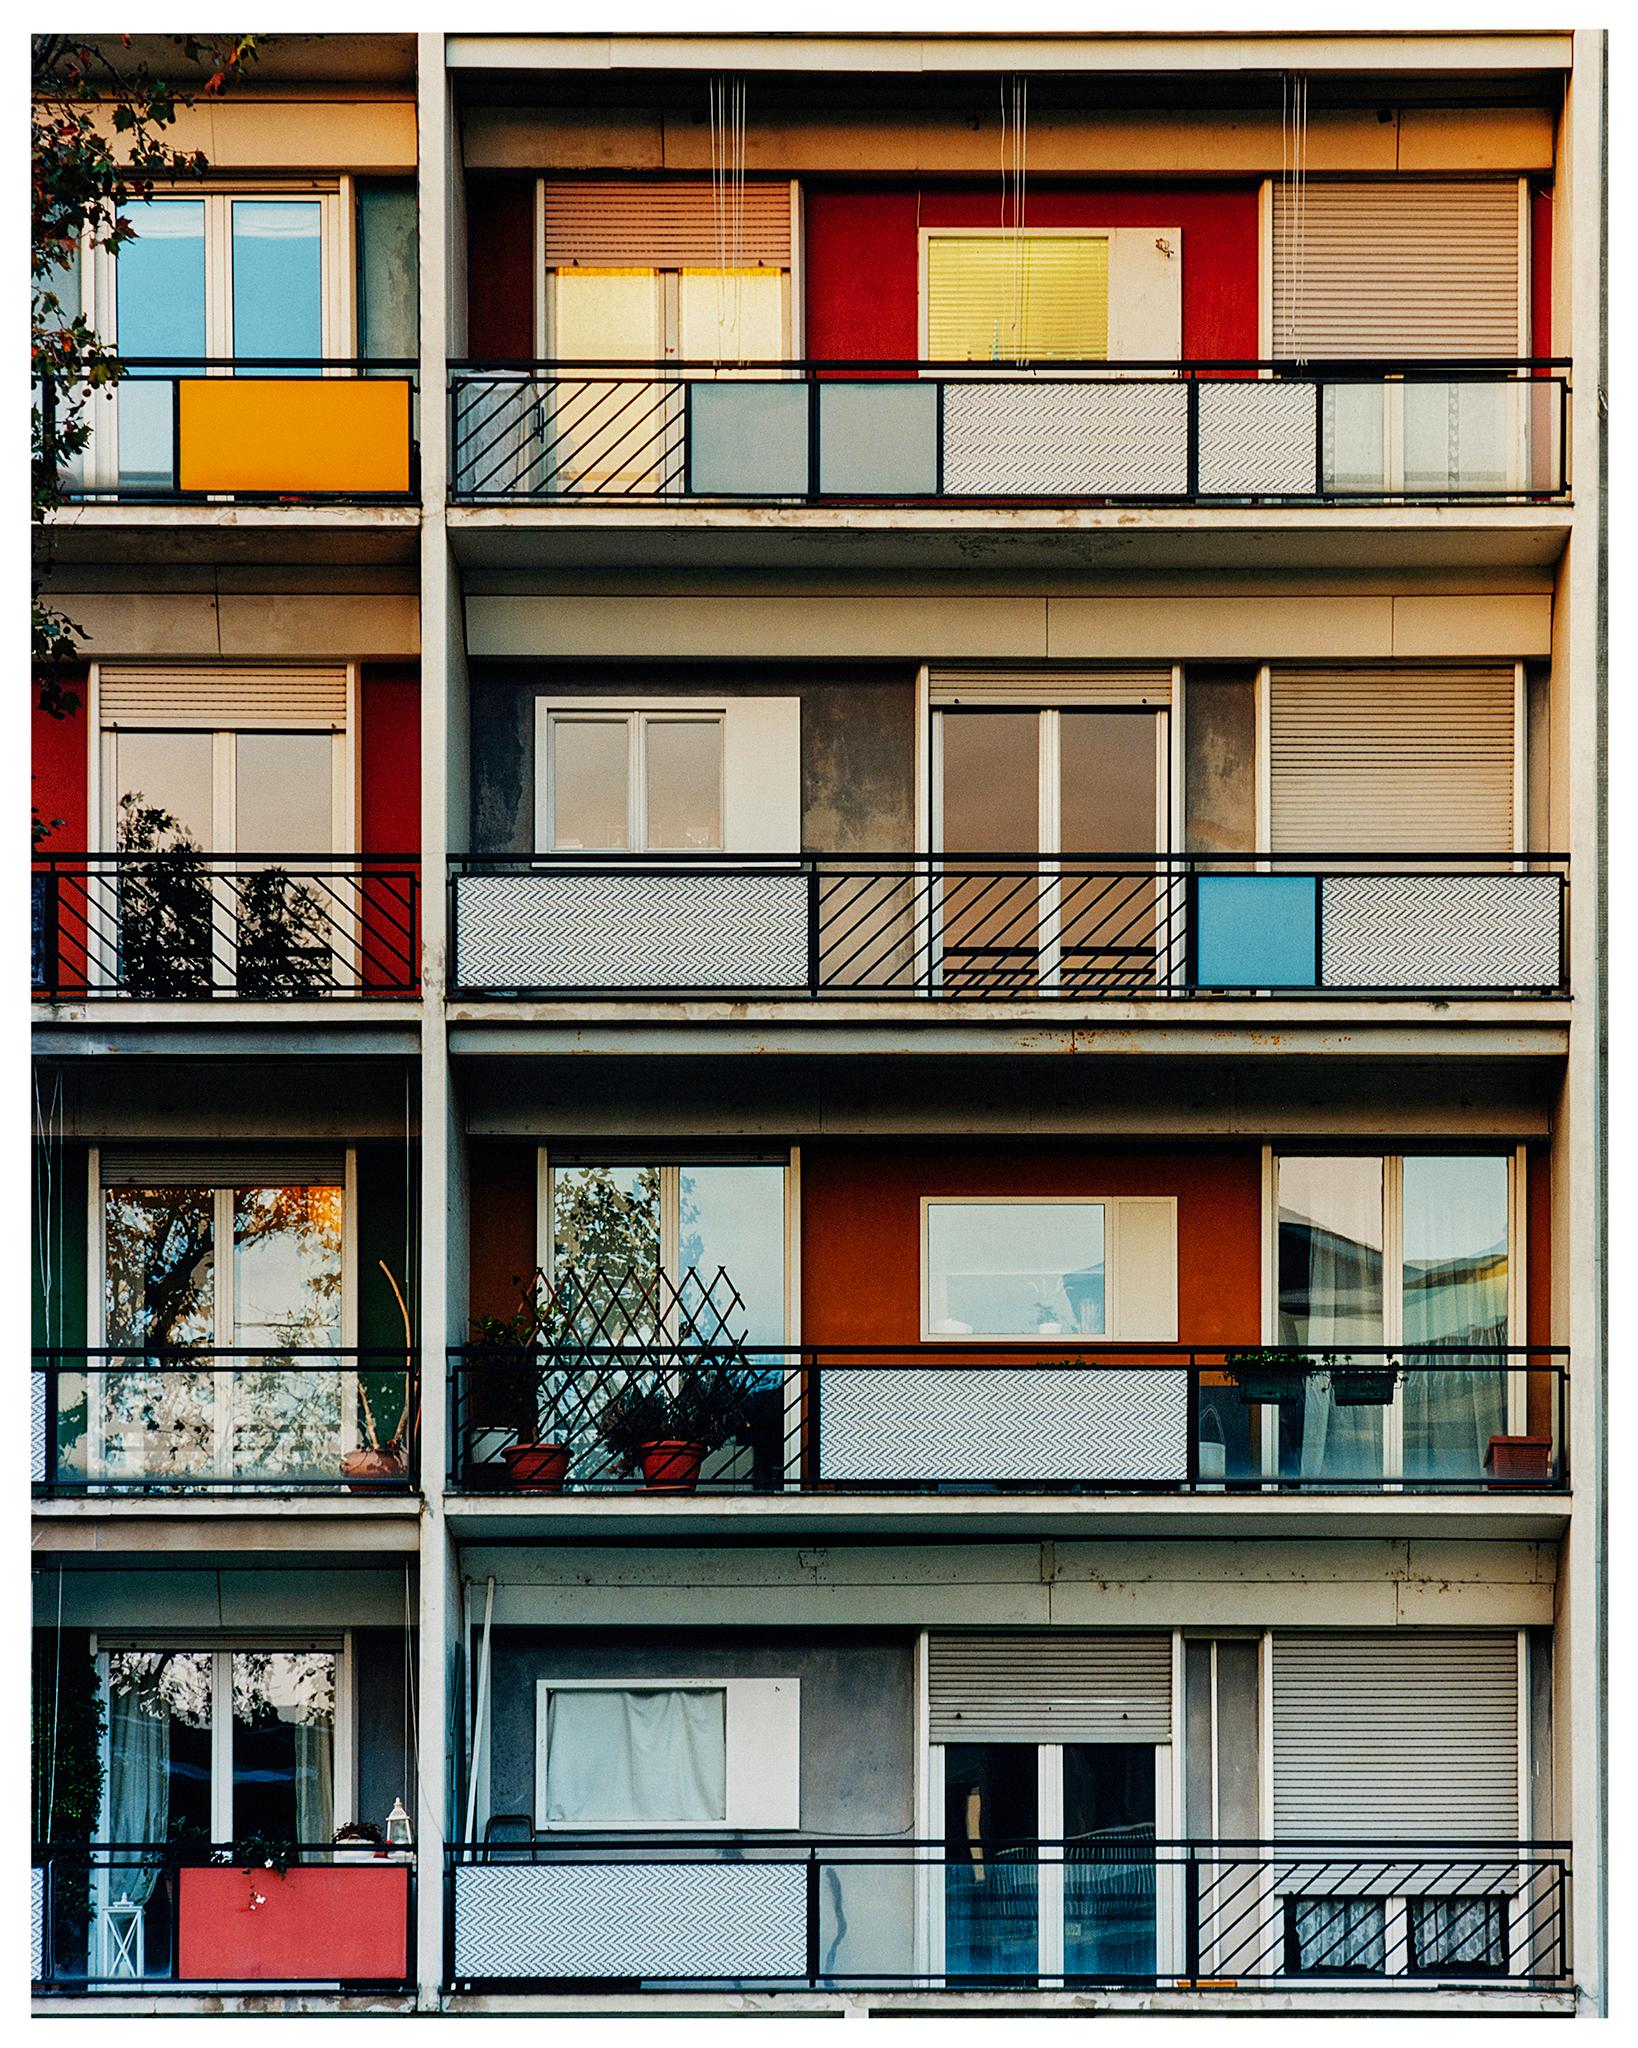 Richard Heeps Color Photograph - 49 Via Dezza at Sunset, Milan - Italian Architecture Photograph 